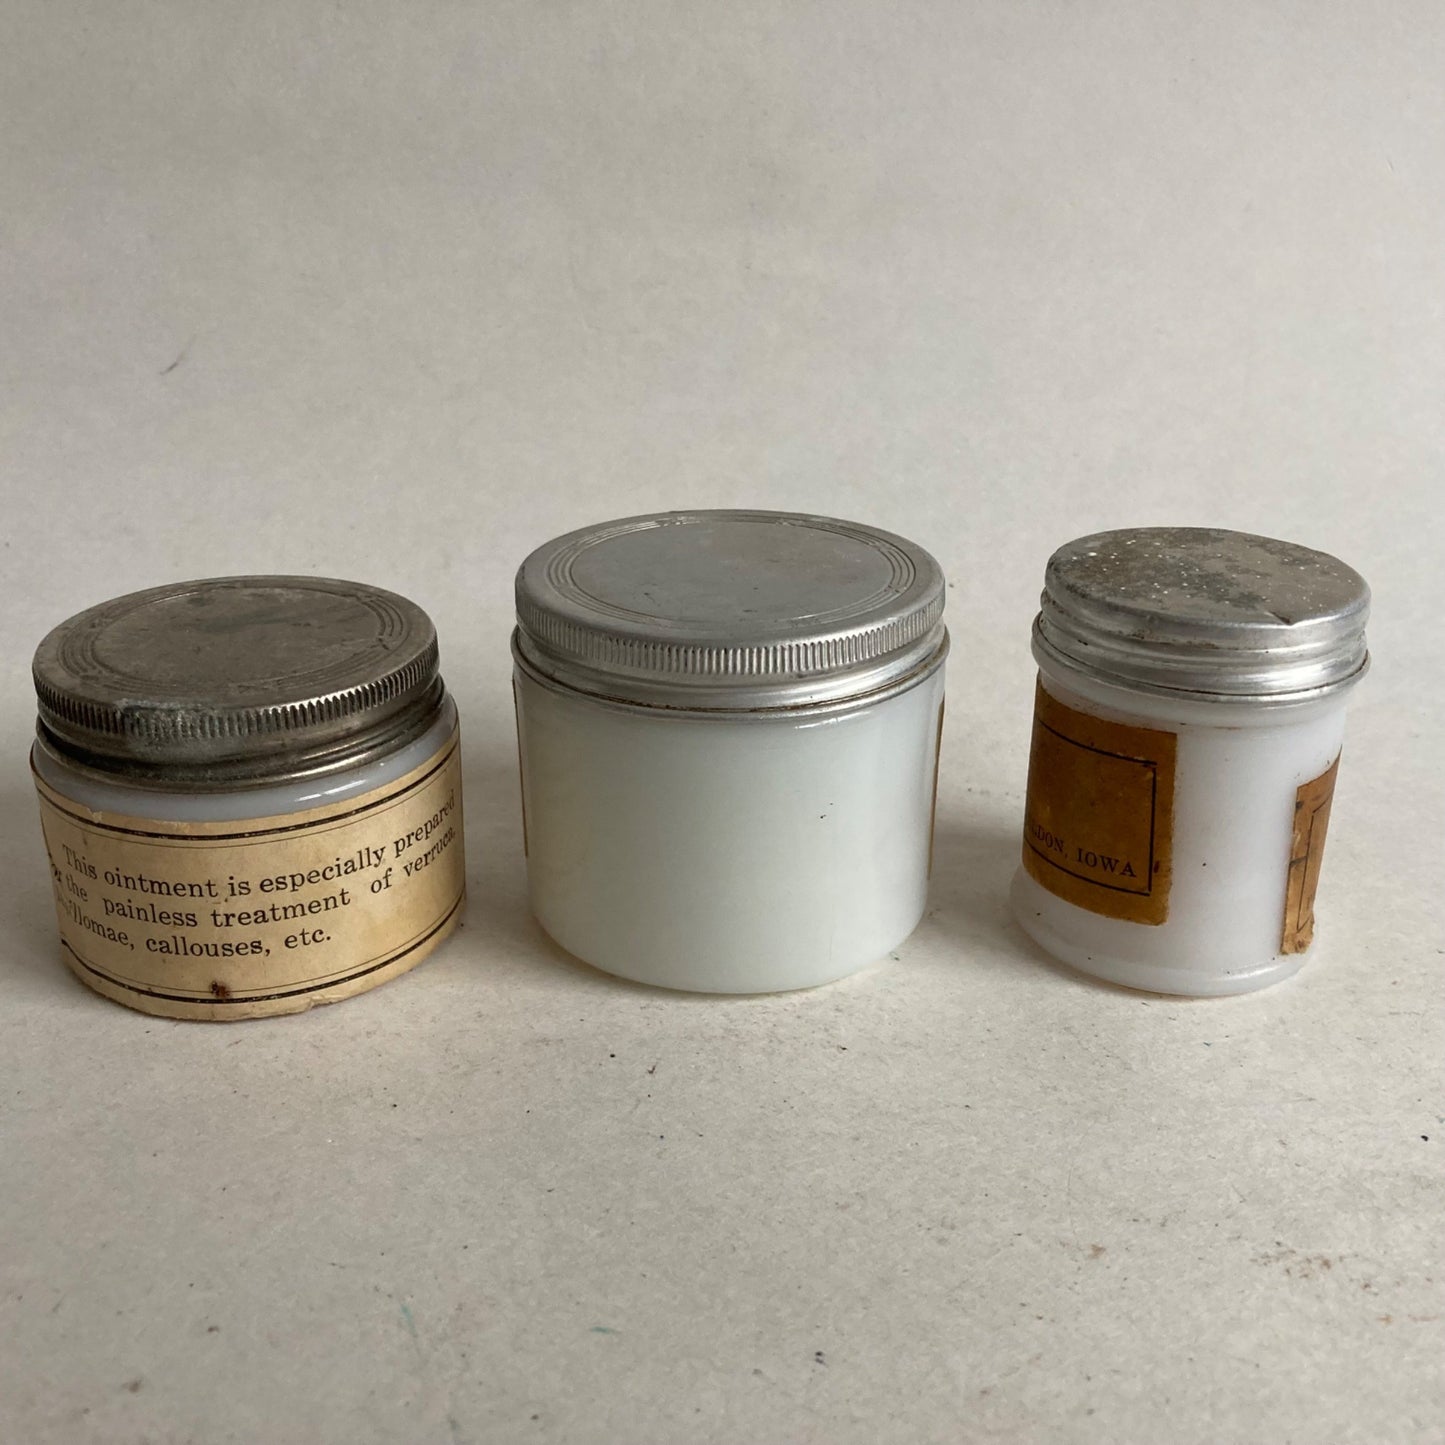 Lot 3 Vintage Medicine Jars Acid Ointment Scholl & Dr. Coles Foot Massage Cream